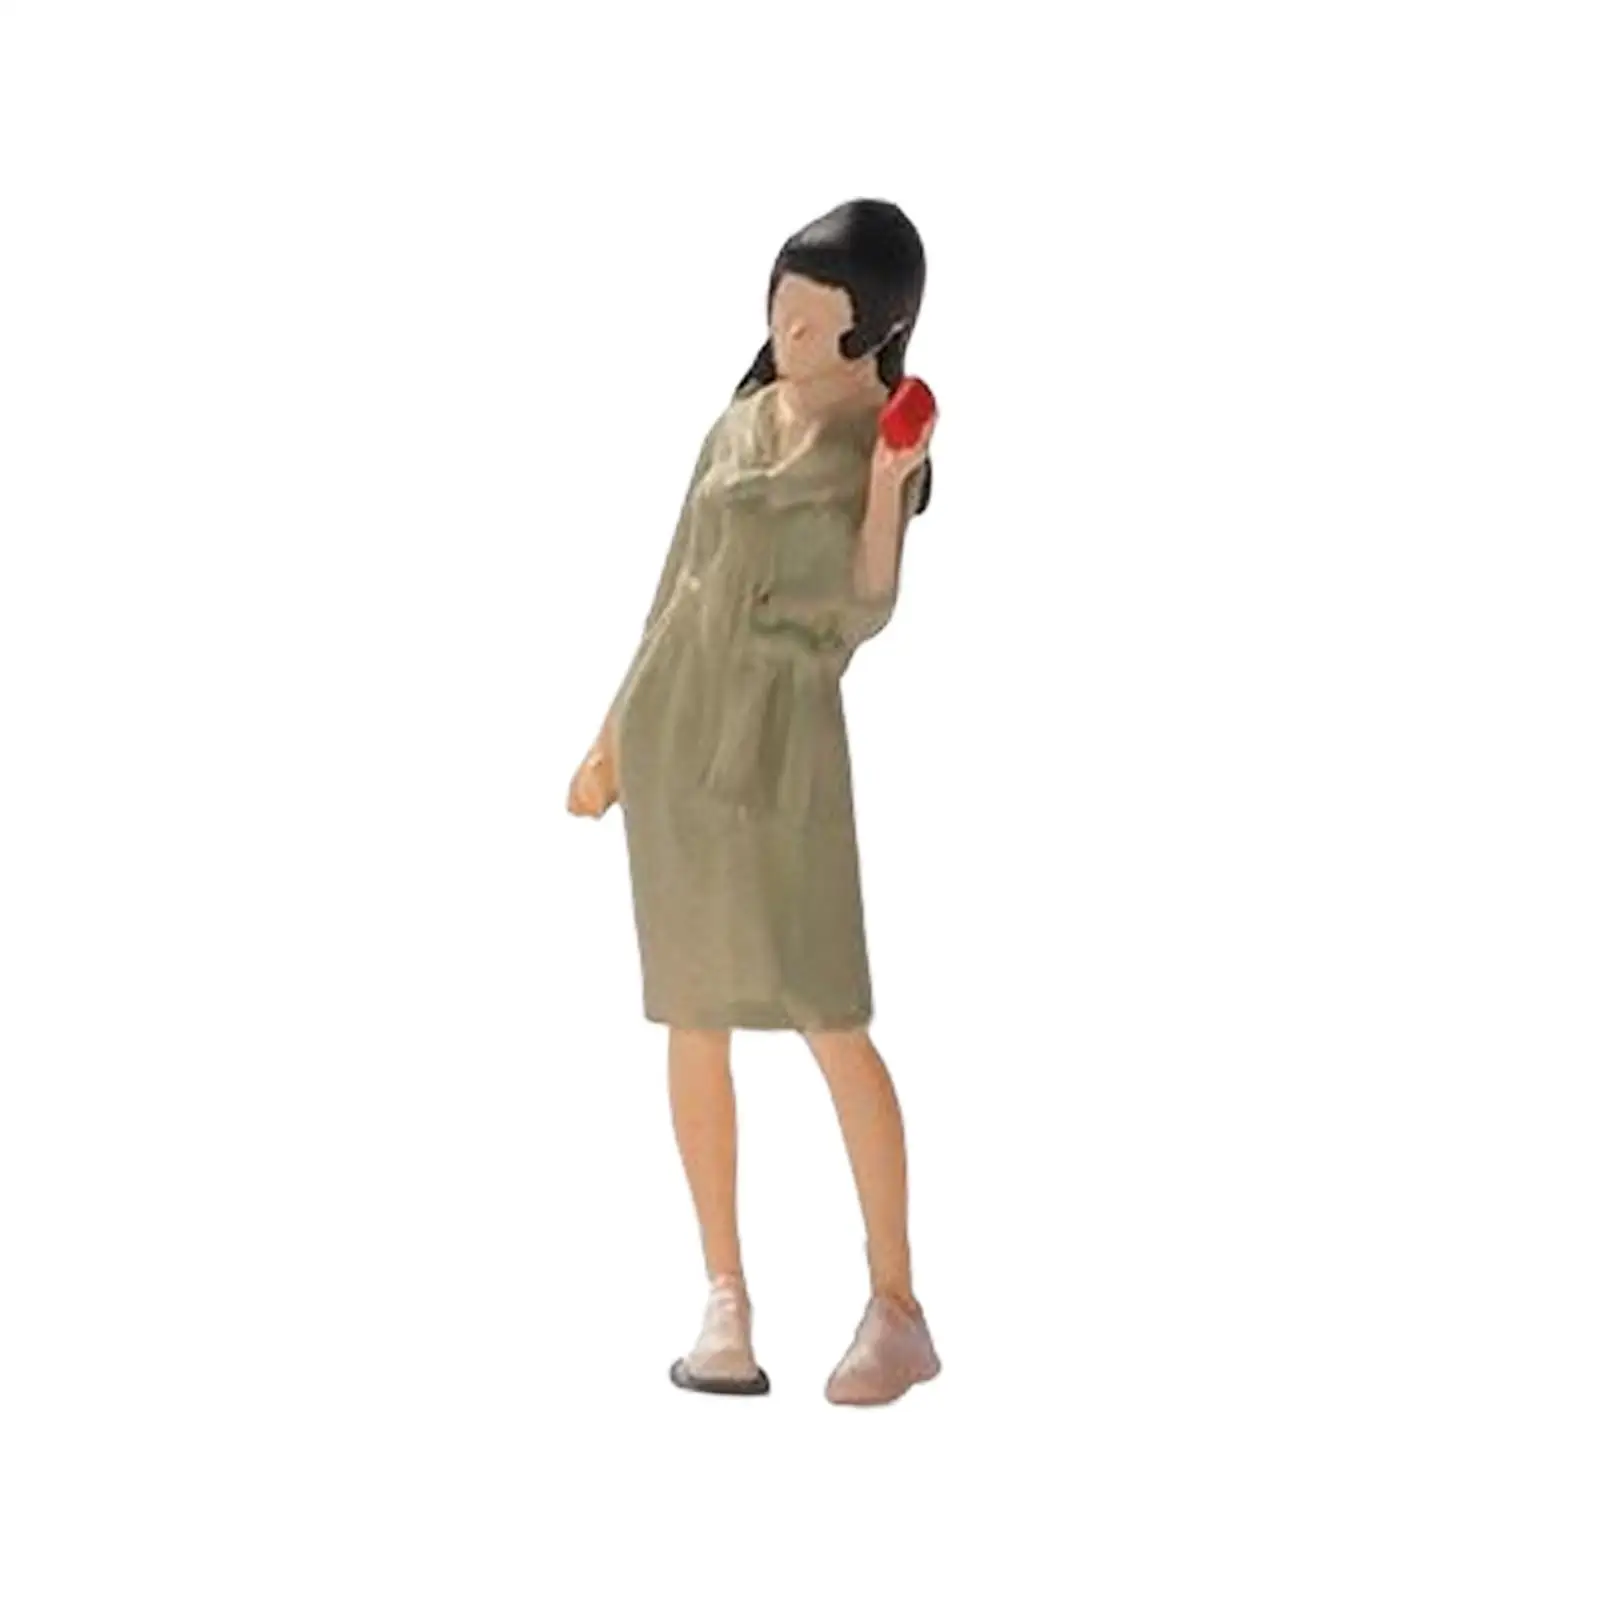 1:64 Scale Miniature Girls Model Stimulated Dioramas Realistic 1/64 Scale People Model for Desktop Decoration Micro Landscape